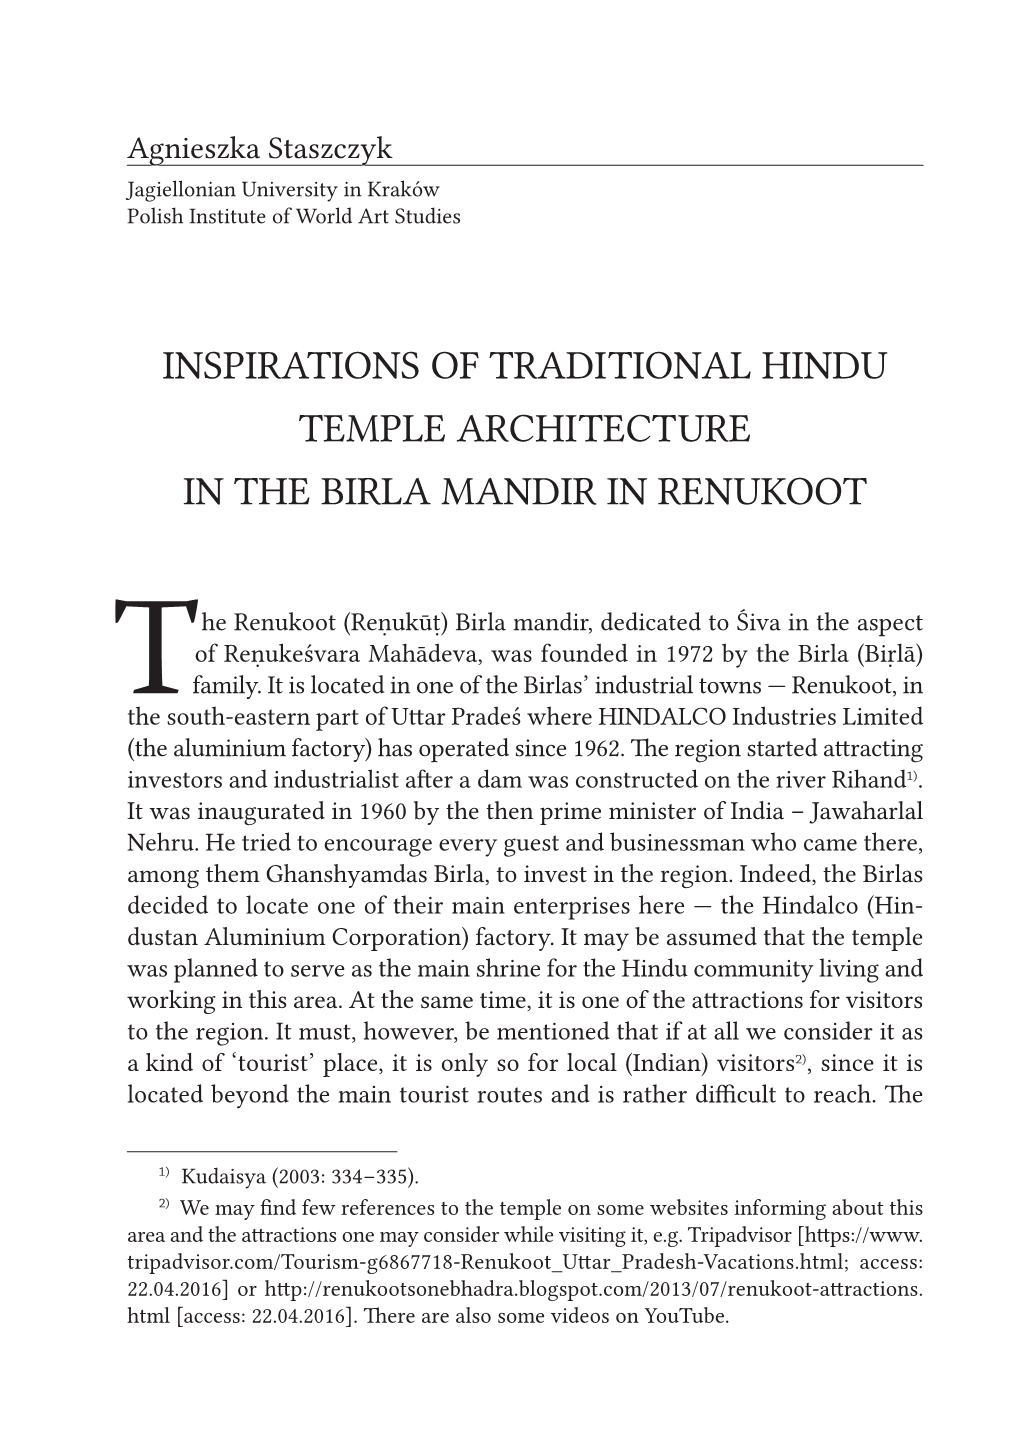 Inspirations of Traditional Hindu Temple Architecture in the Birla Mandir in Renukoot